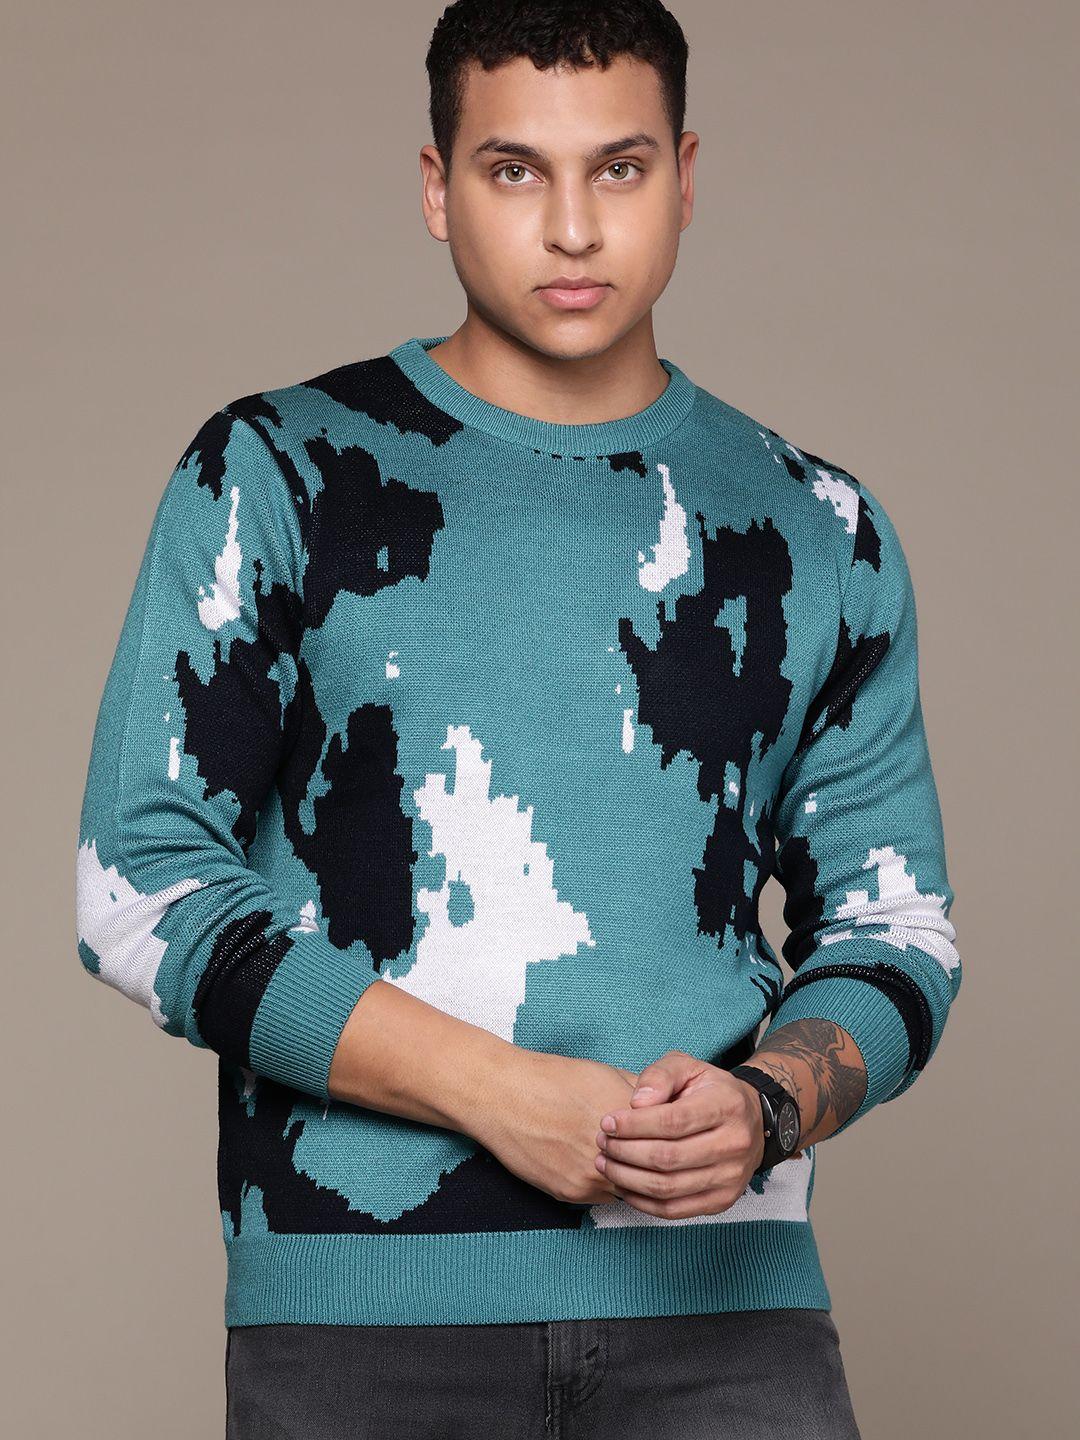 roadster-men-self-design-pullover-sweater